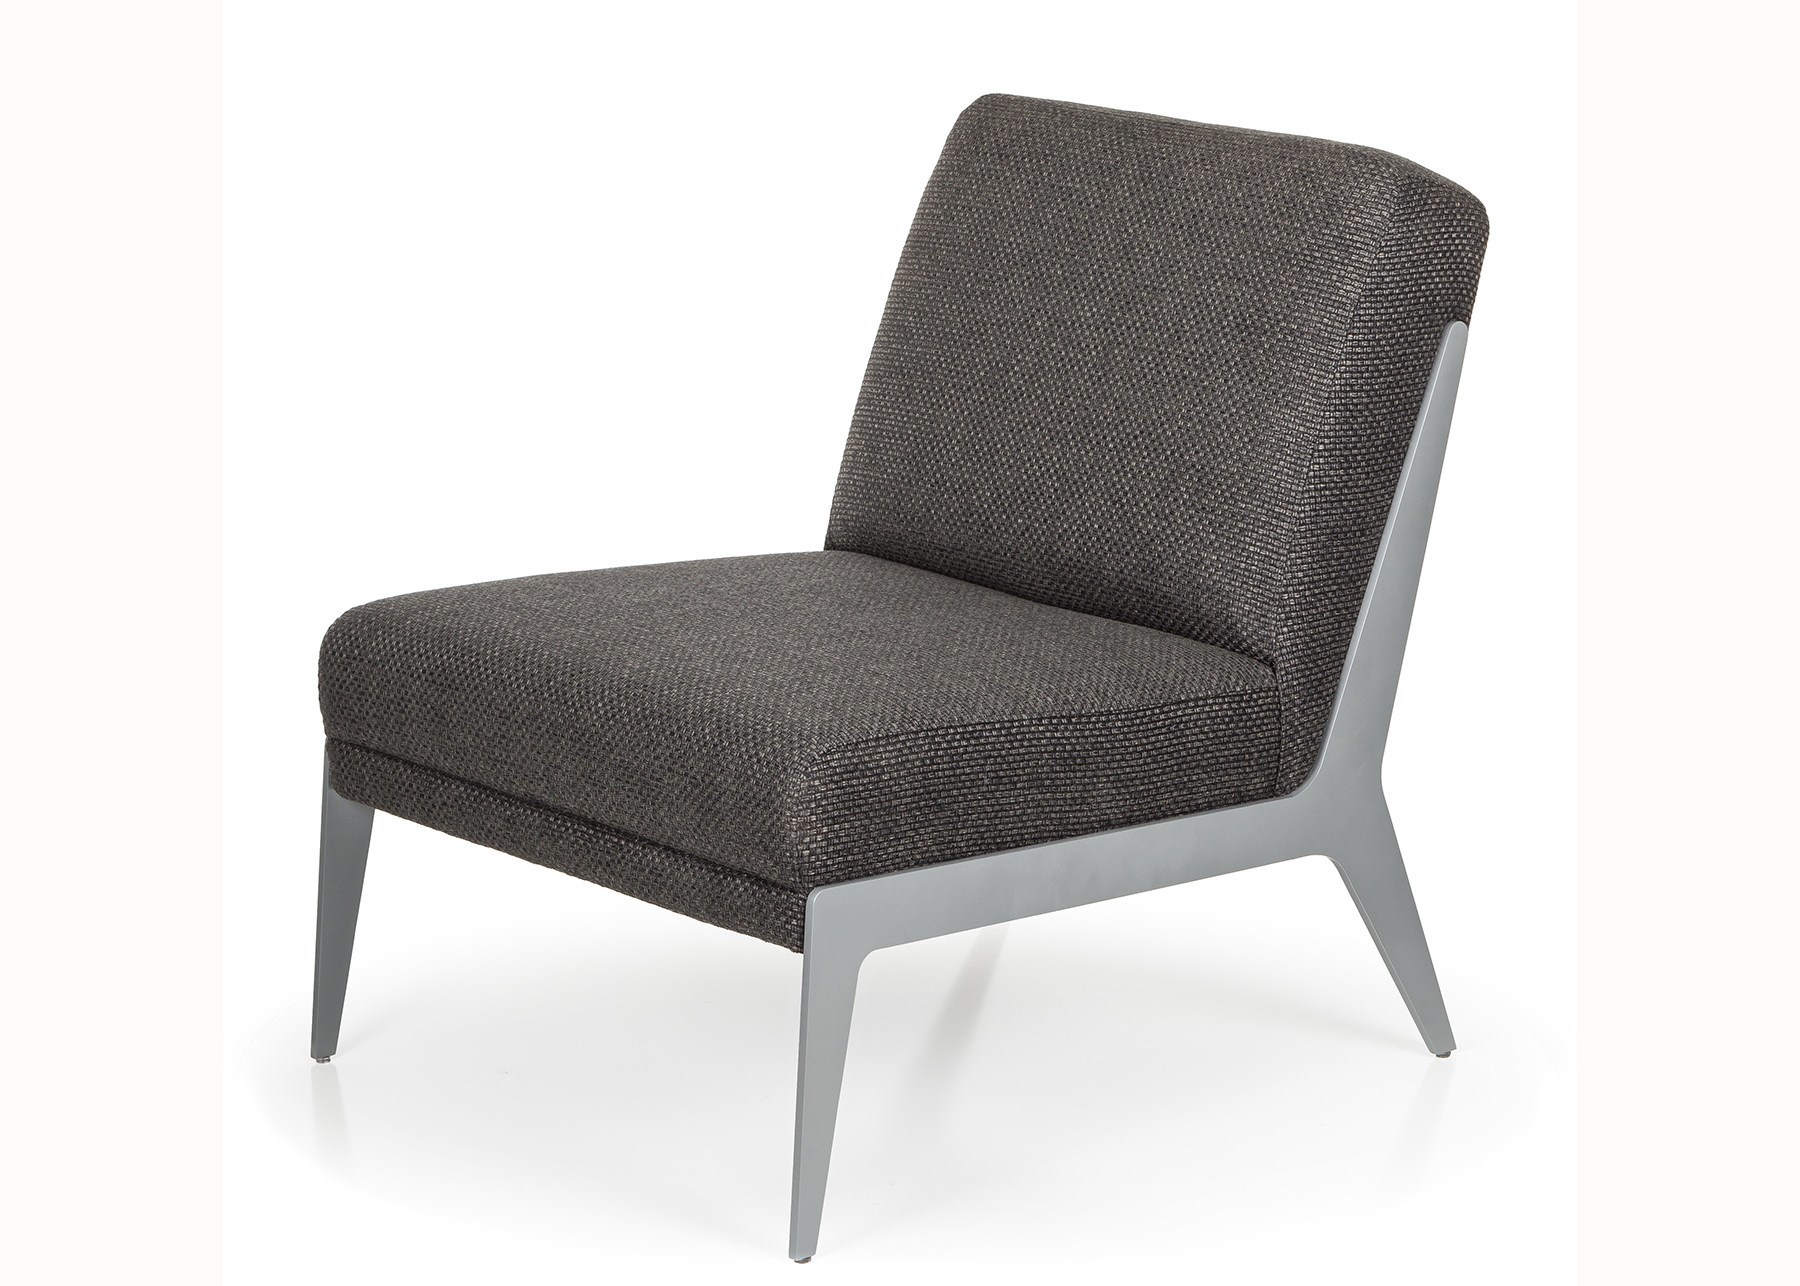 Cabot Wrenn Bask Lounge Chair